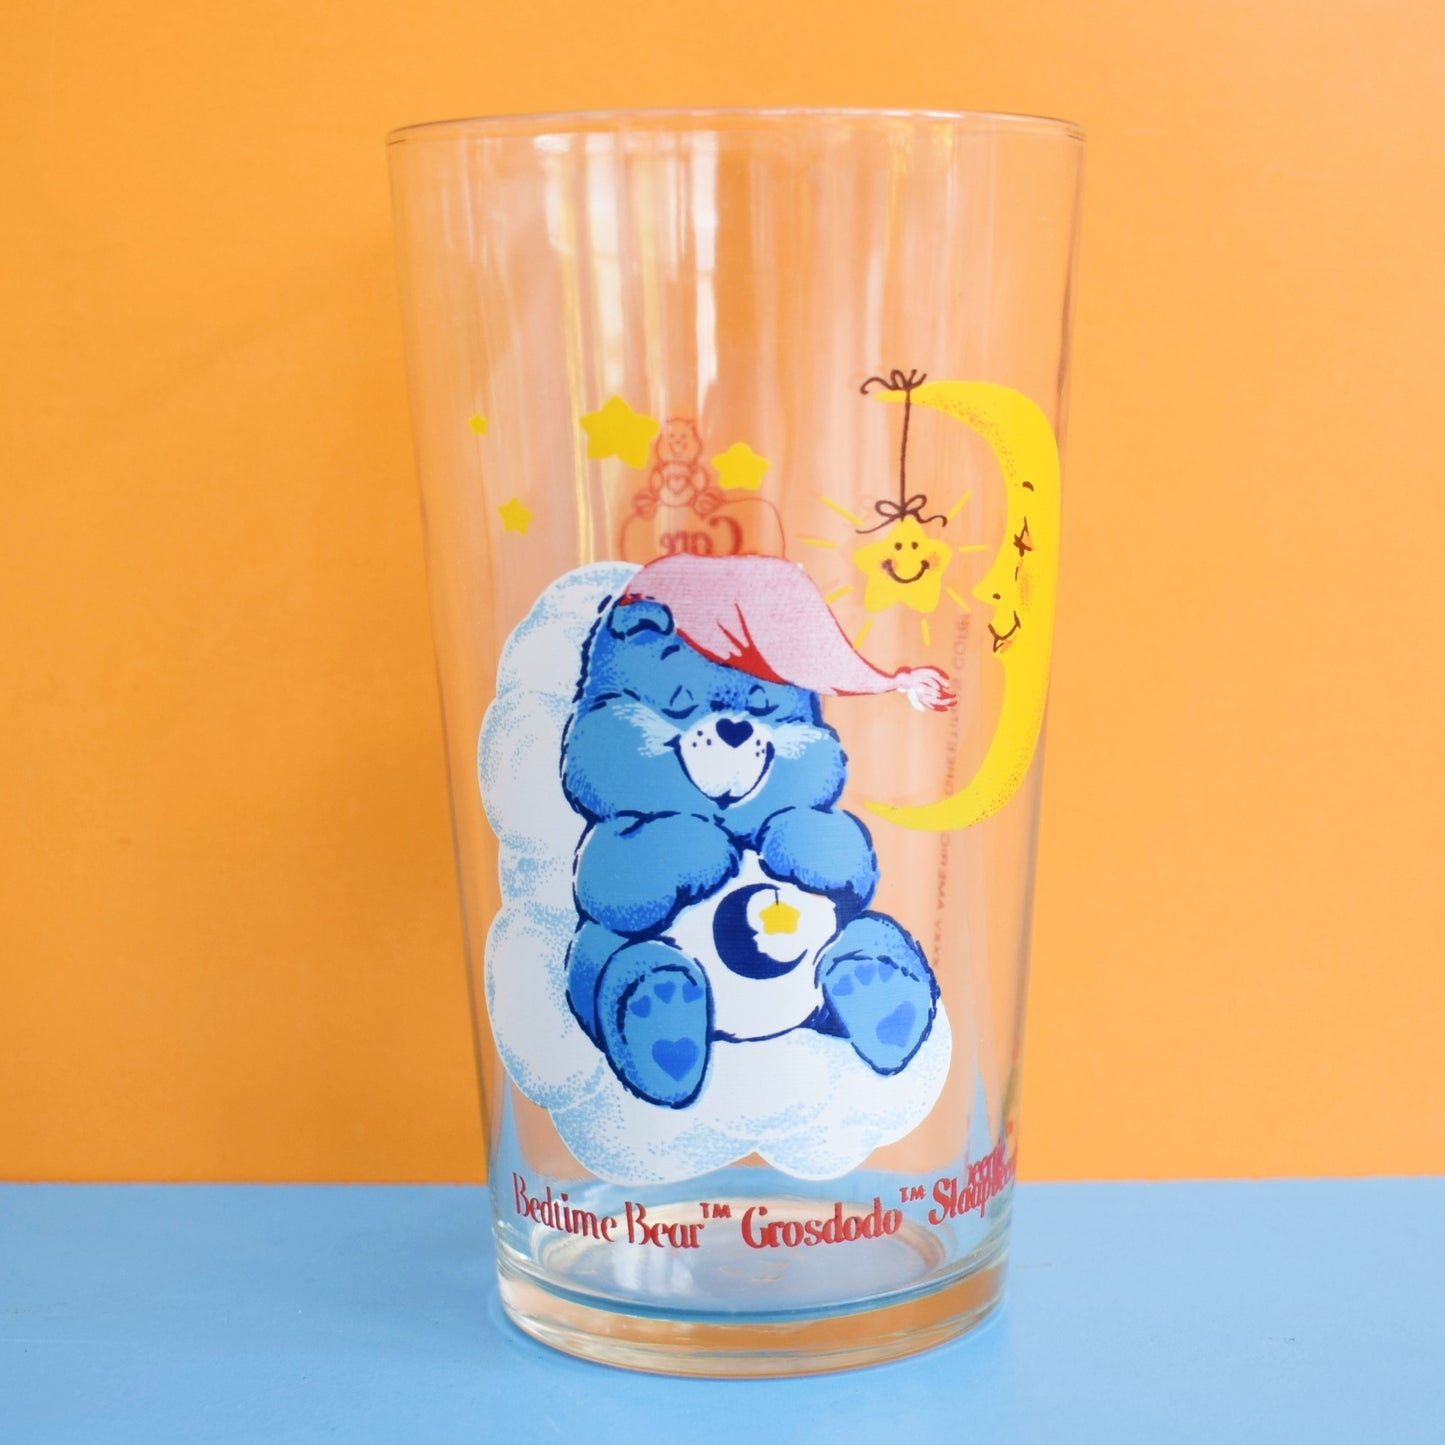 Vintage 1980s Care Bear Glass - American Greetings - Bedtime Bear